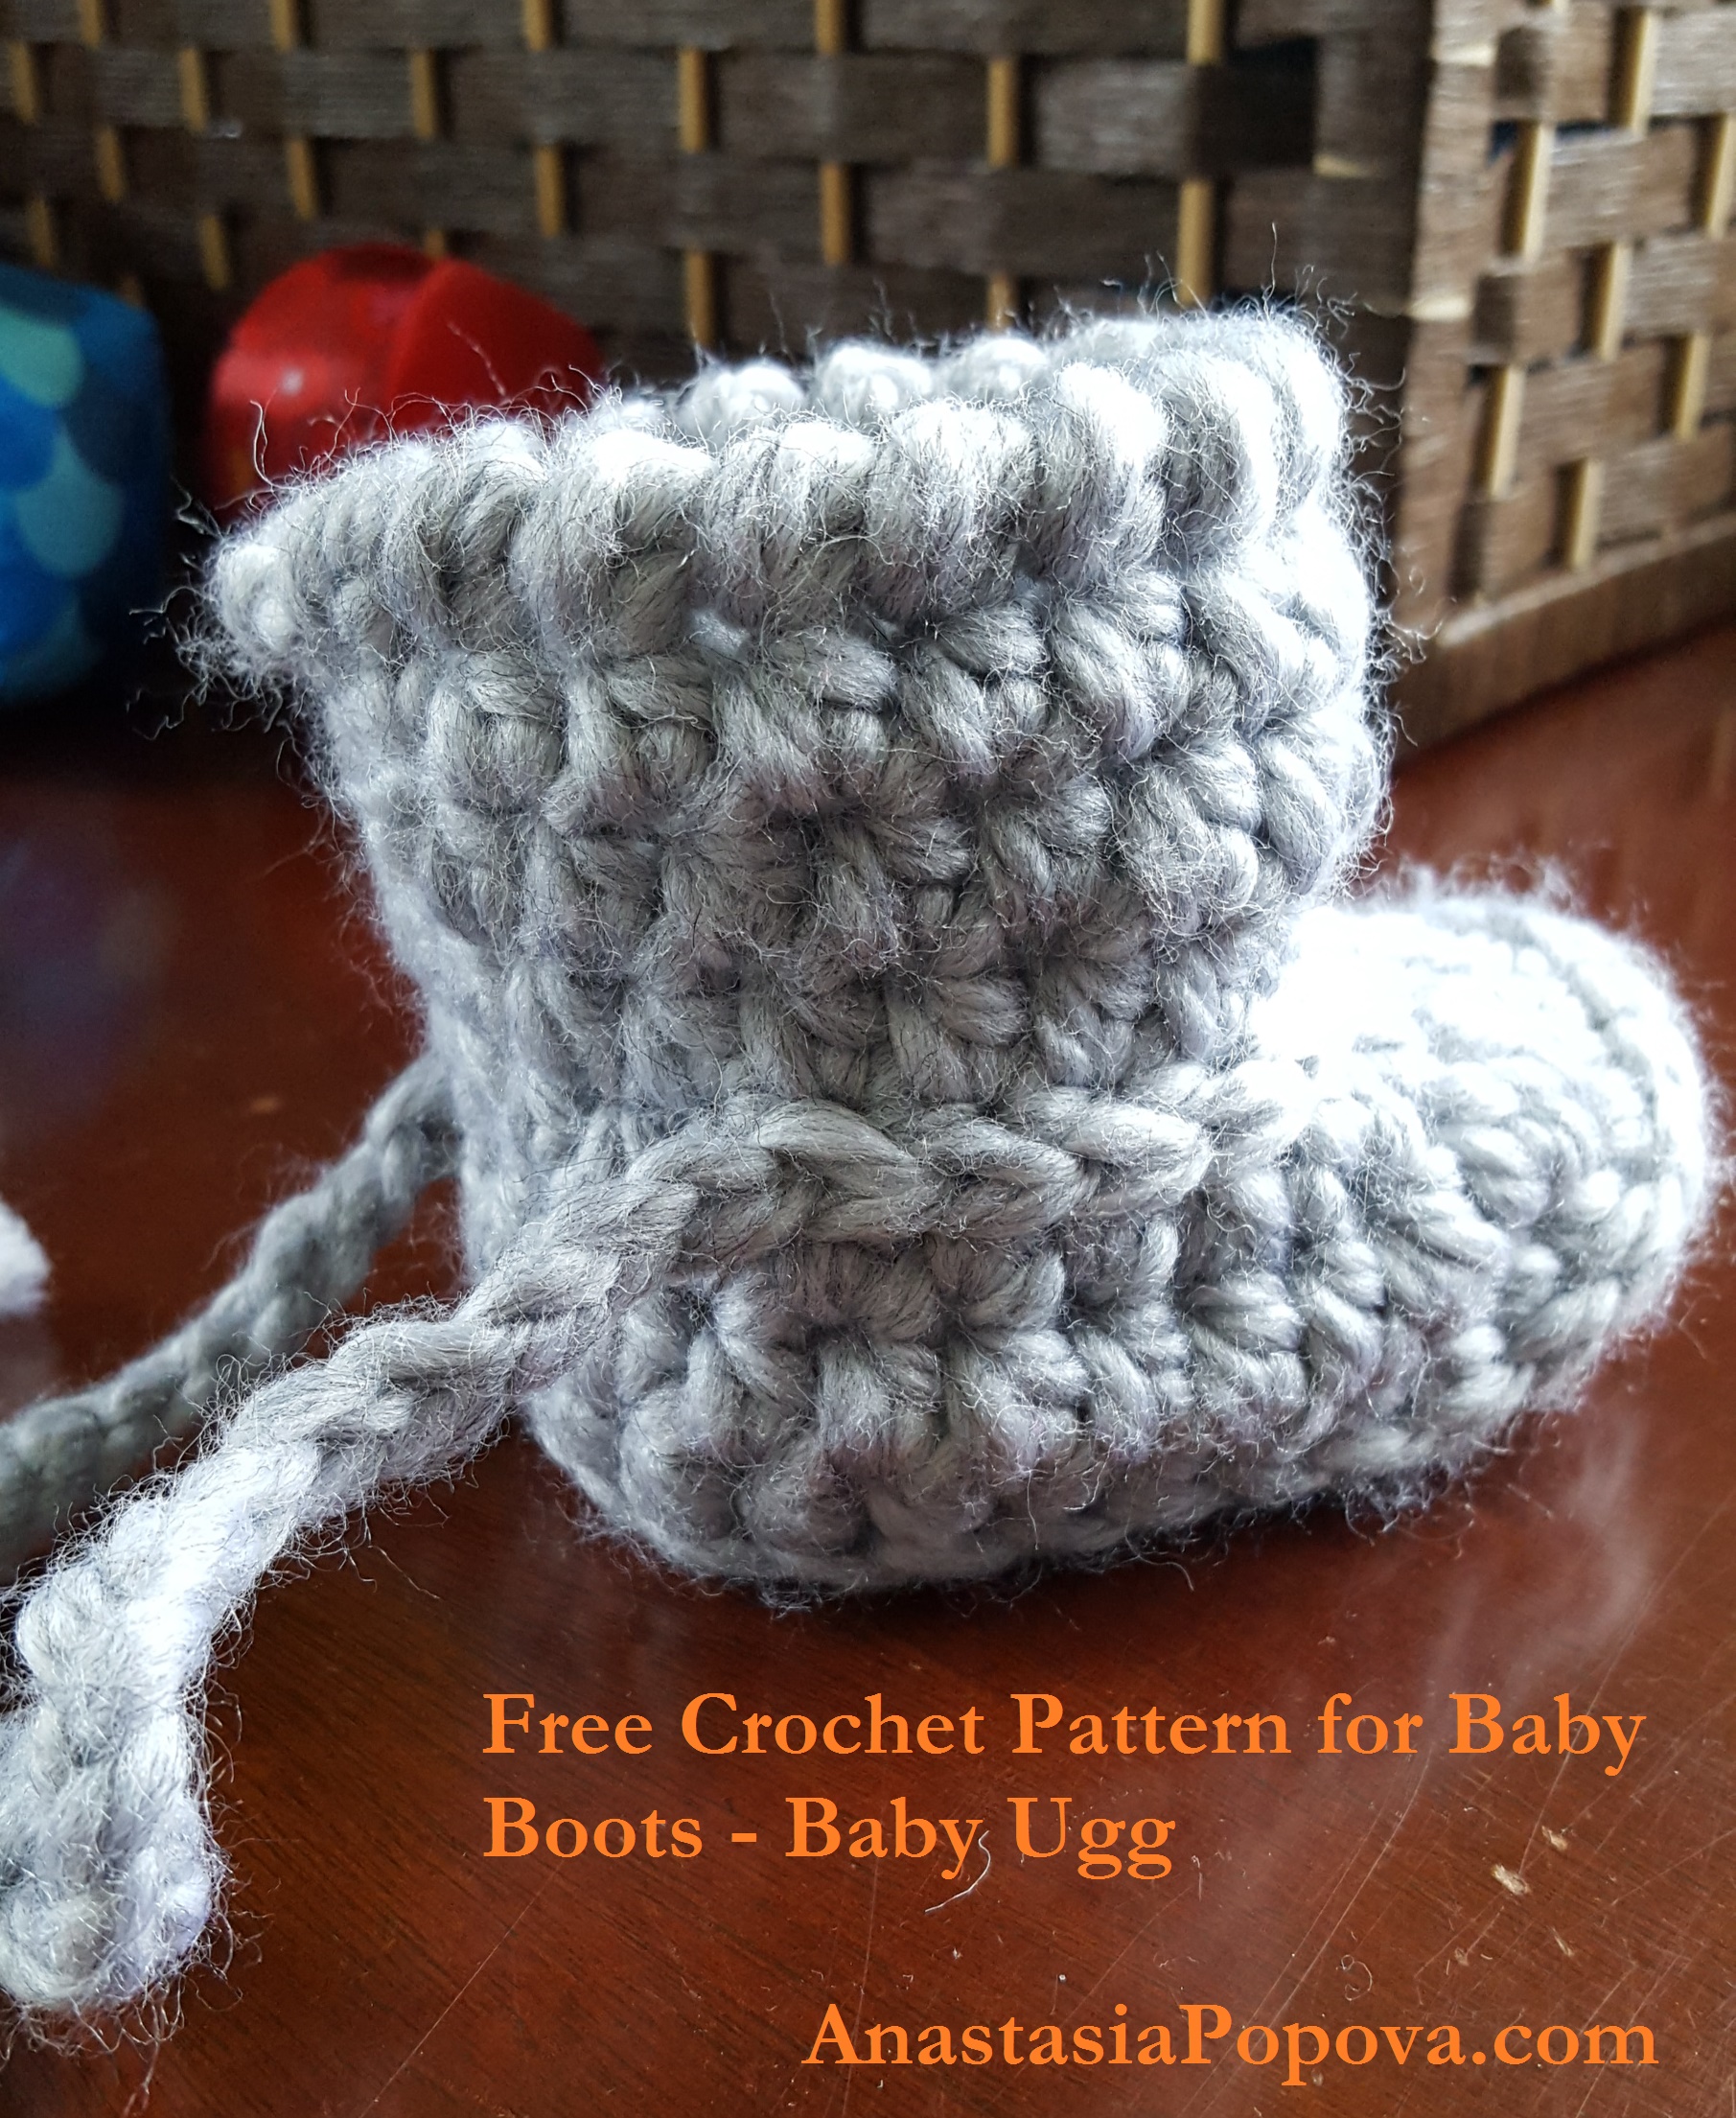 Free Crochet Pattern for Baby Boots - baby ugg. - Anastasia Popova